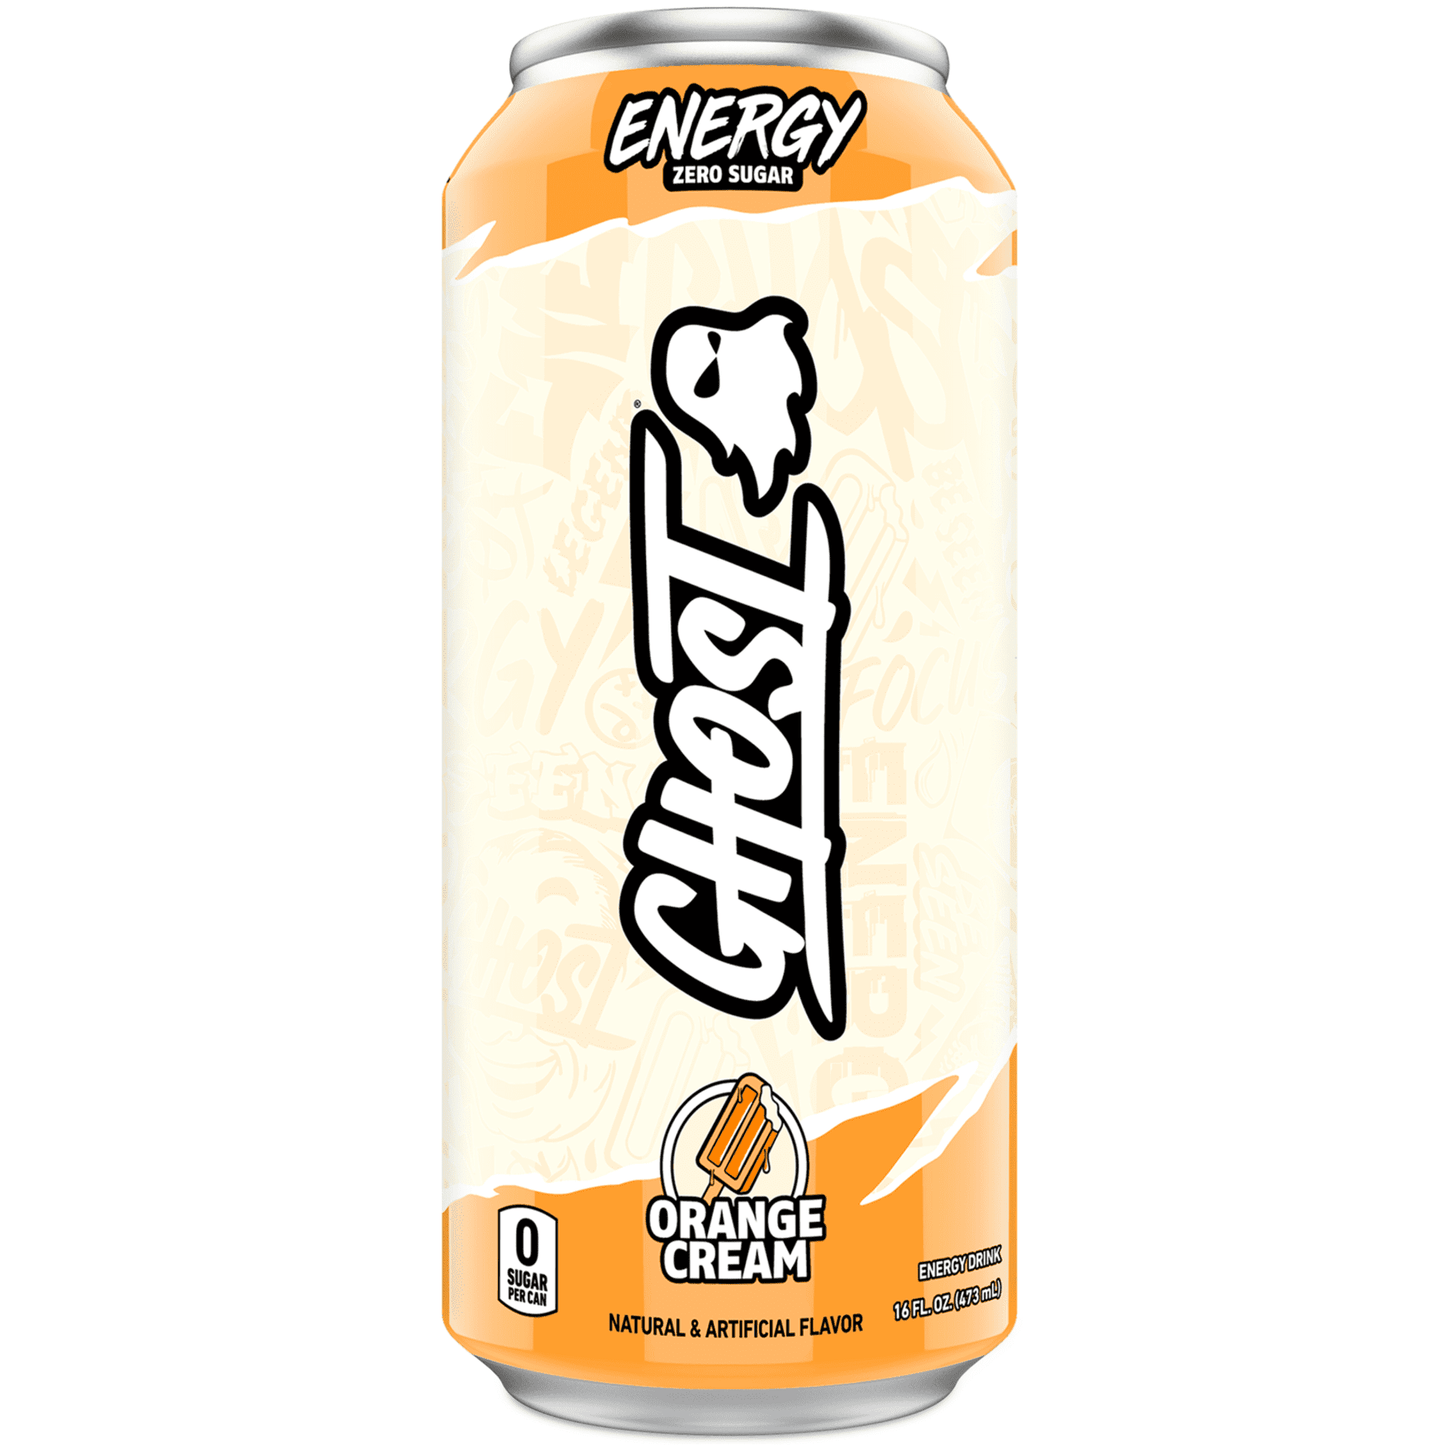 GHOST® ENERGY Zero Sugar Energy Drink, Orange Cream, 16 fl oz Can